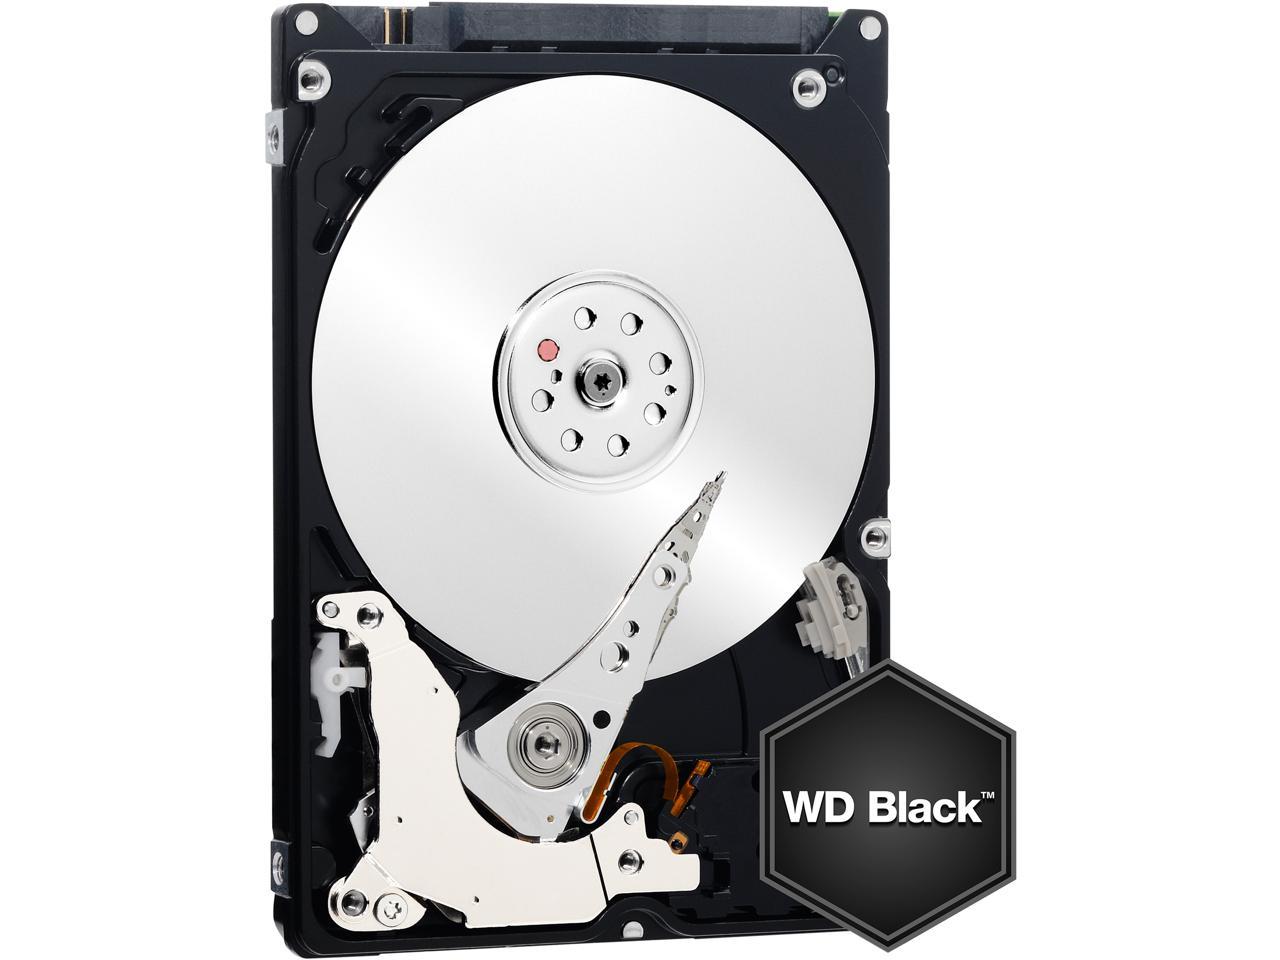 Wd Black Series Wd3200Bekx 320Gb 7200 Rpm 16Mb Cache Sata 6.0Gb/S 2.5" Internal Notebook Hard Drive Bare Drive